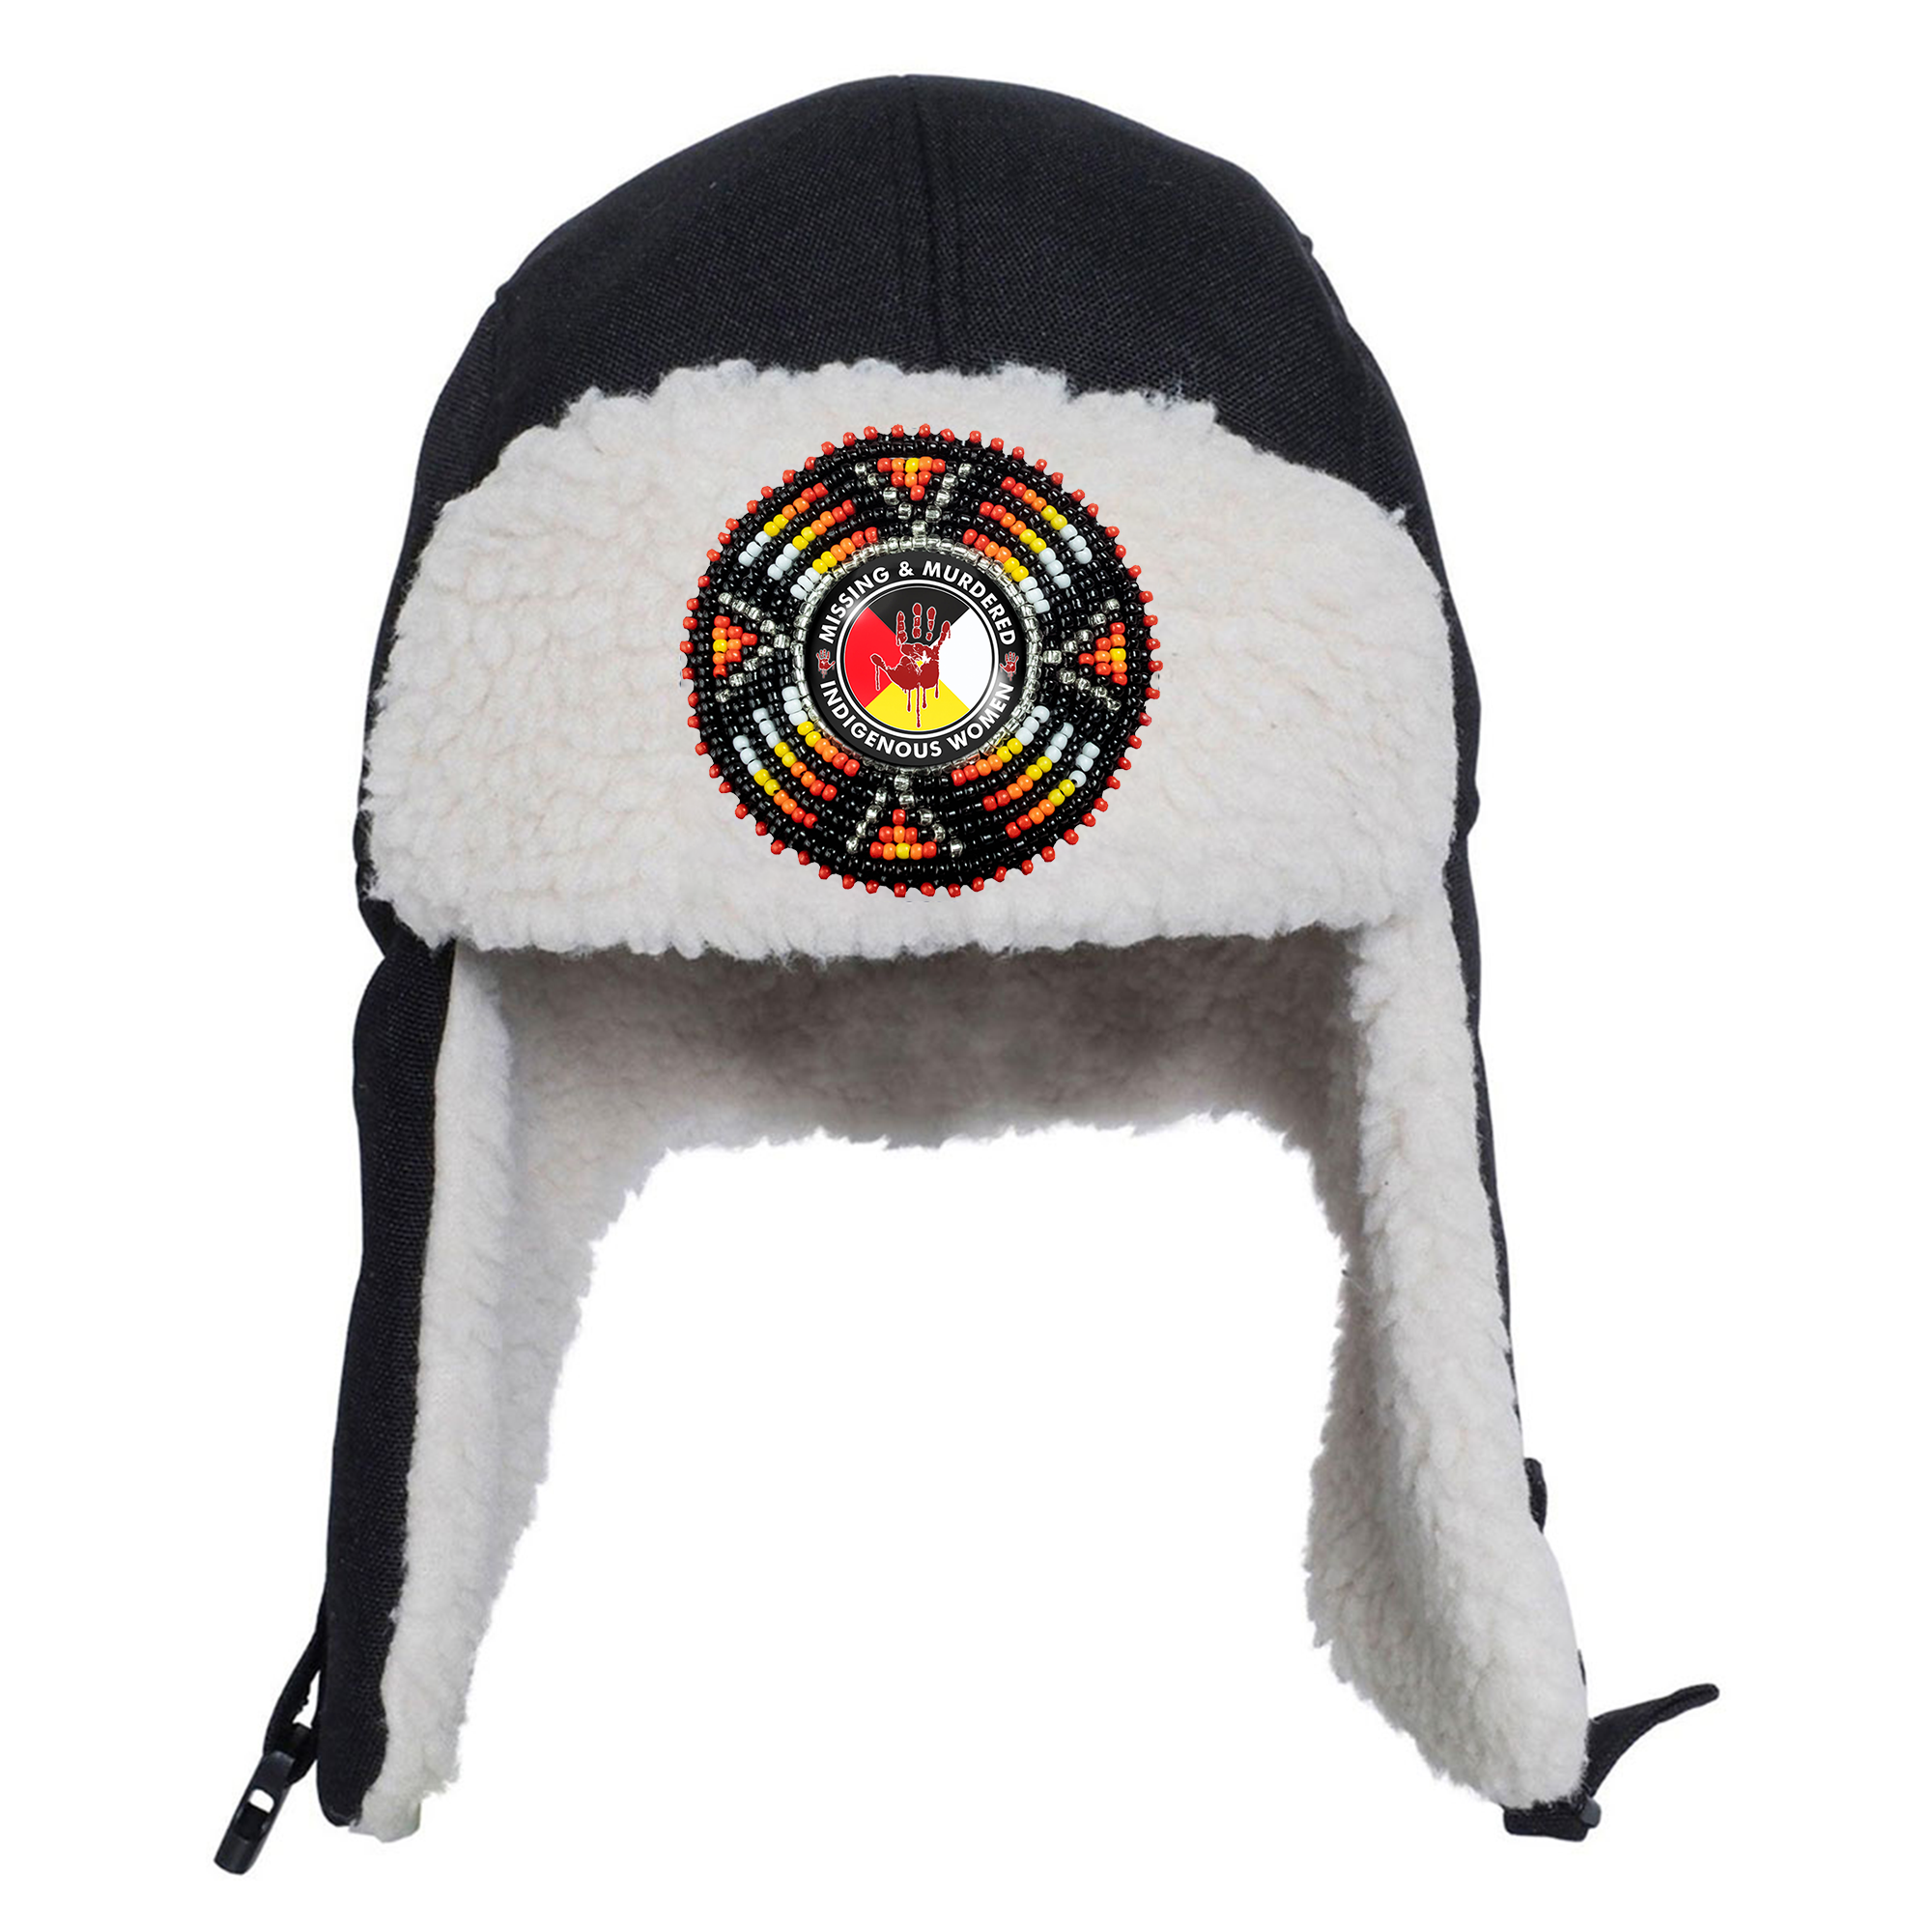 SALE 50% OFF - MMIW Beaded Winter Trapper Hats For Men Women Native American Style